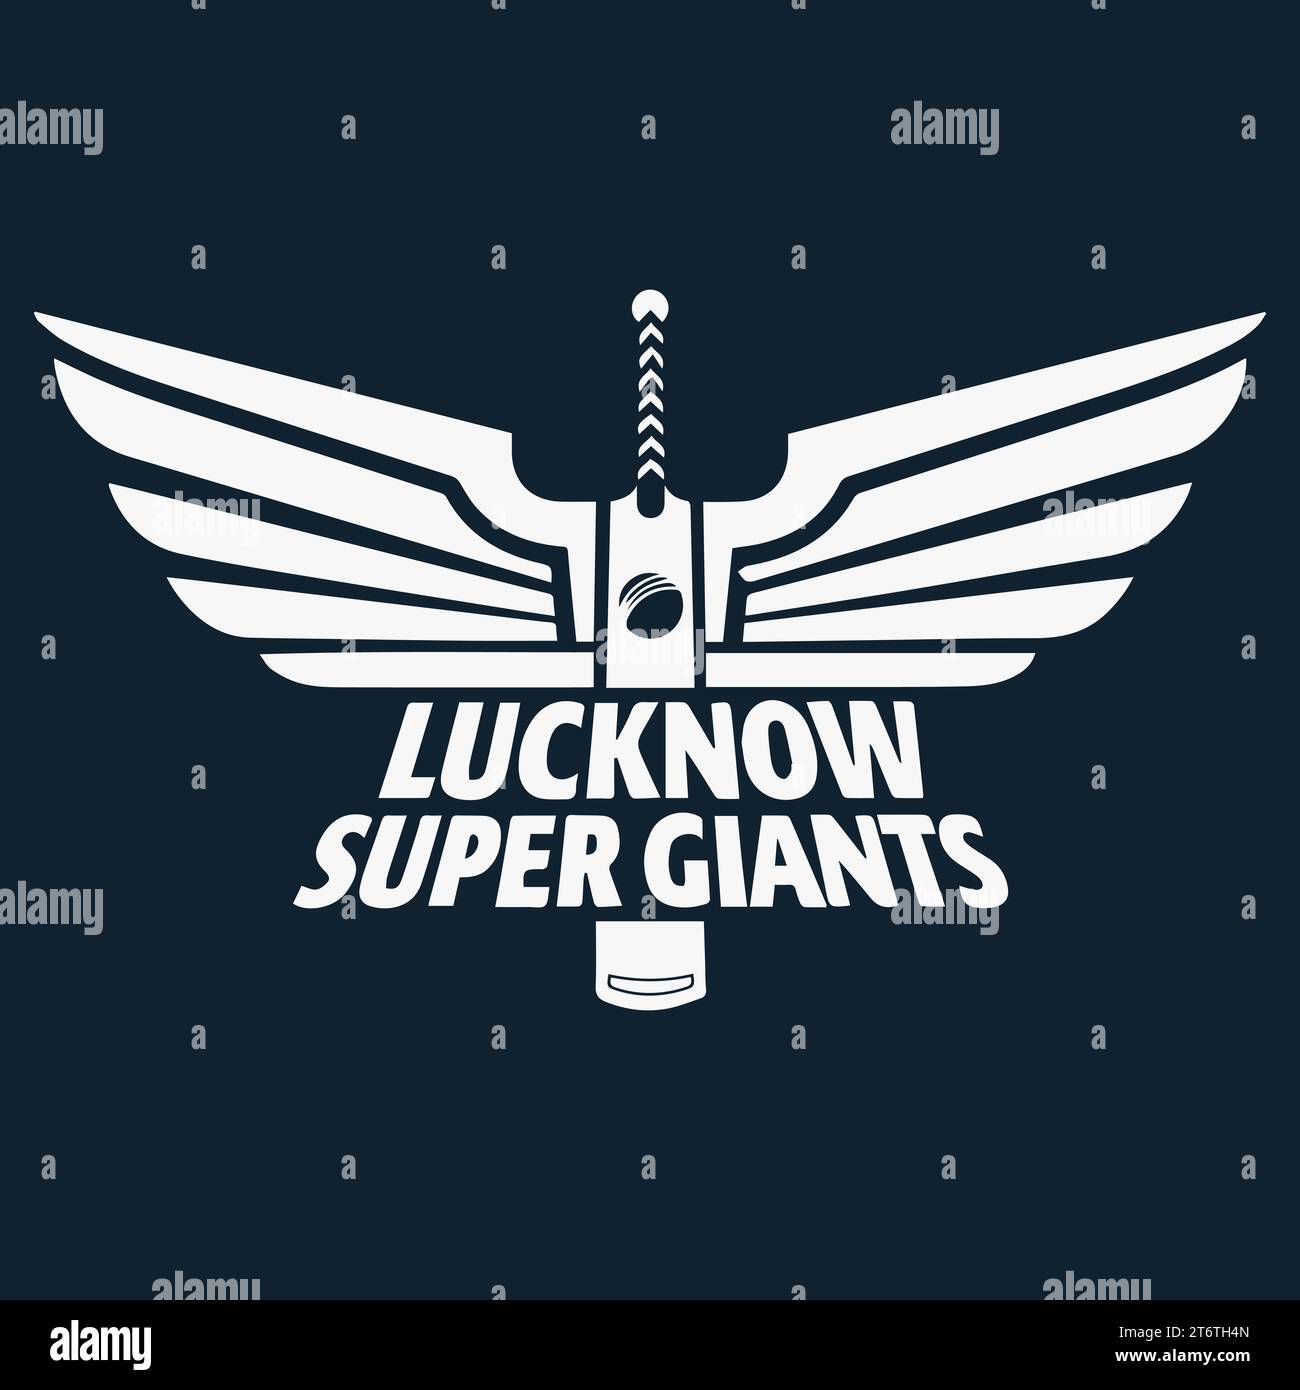 Lucknow Super Giants Logo White Style Indian Professional Cricket Club, Vektor-Illustration abstraktes bearbeitbares Bild Stock Vektor